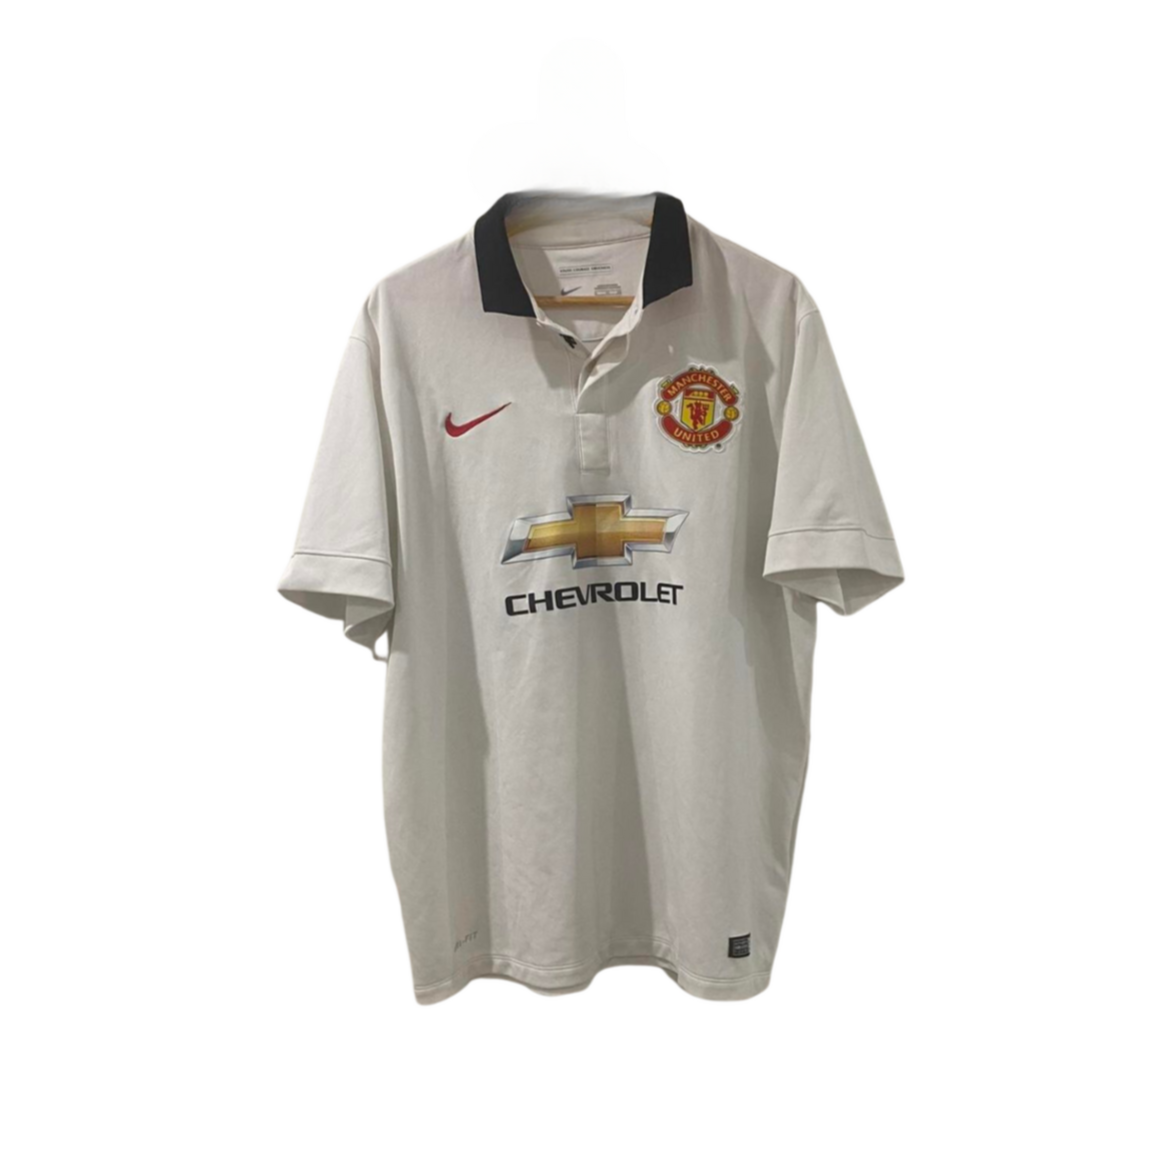 Wayne Rooney Manchester United 2014 away jersey (XL)